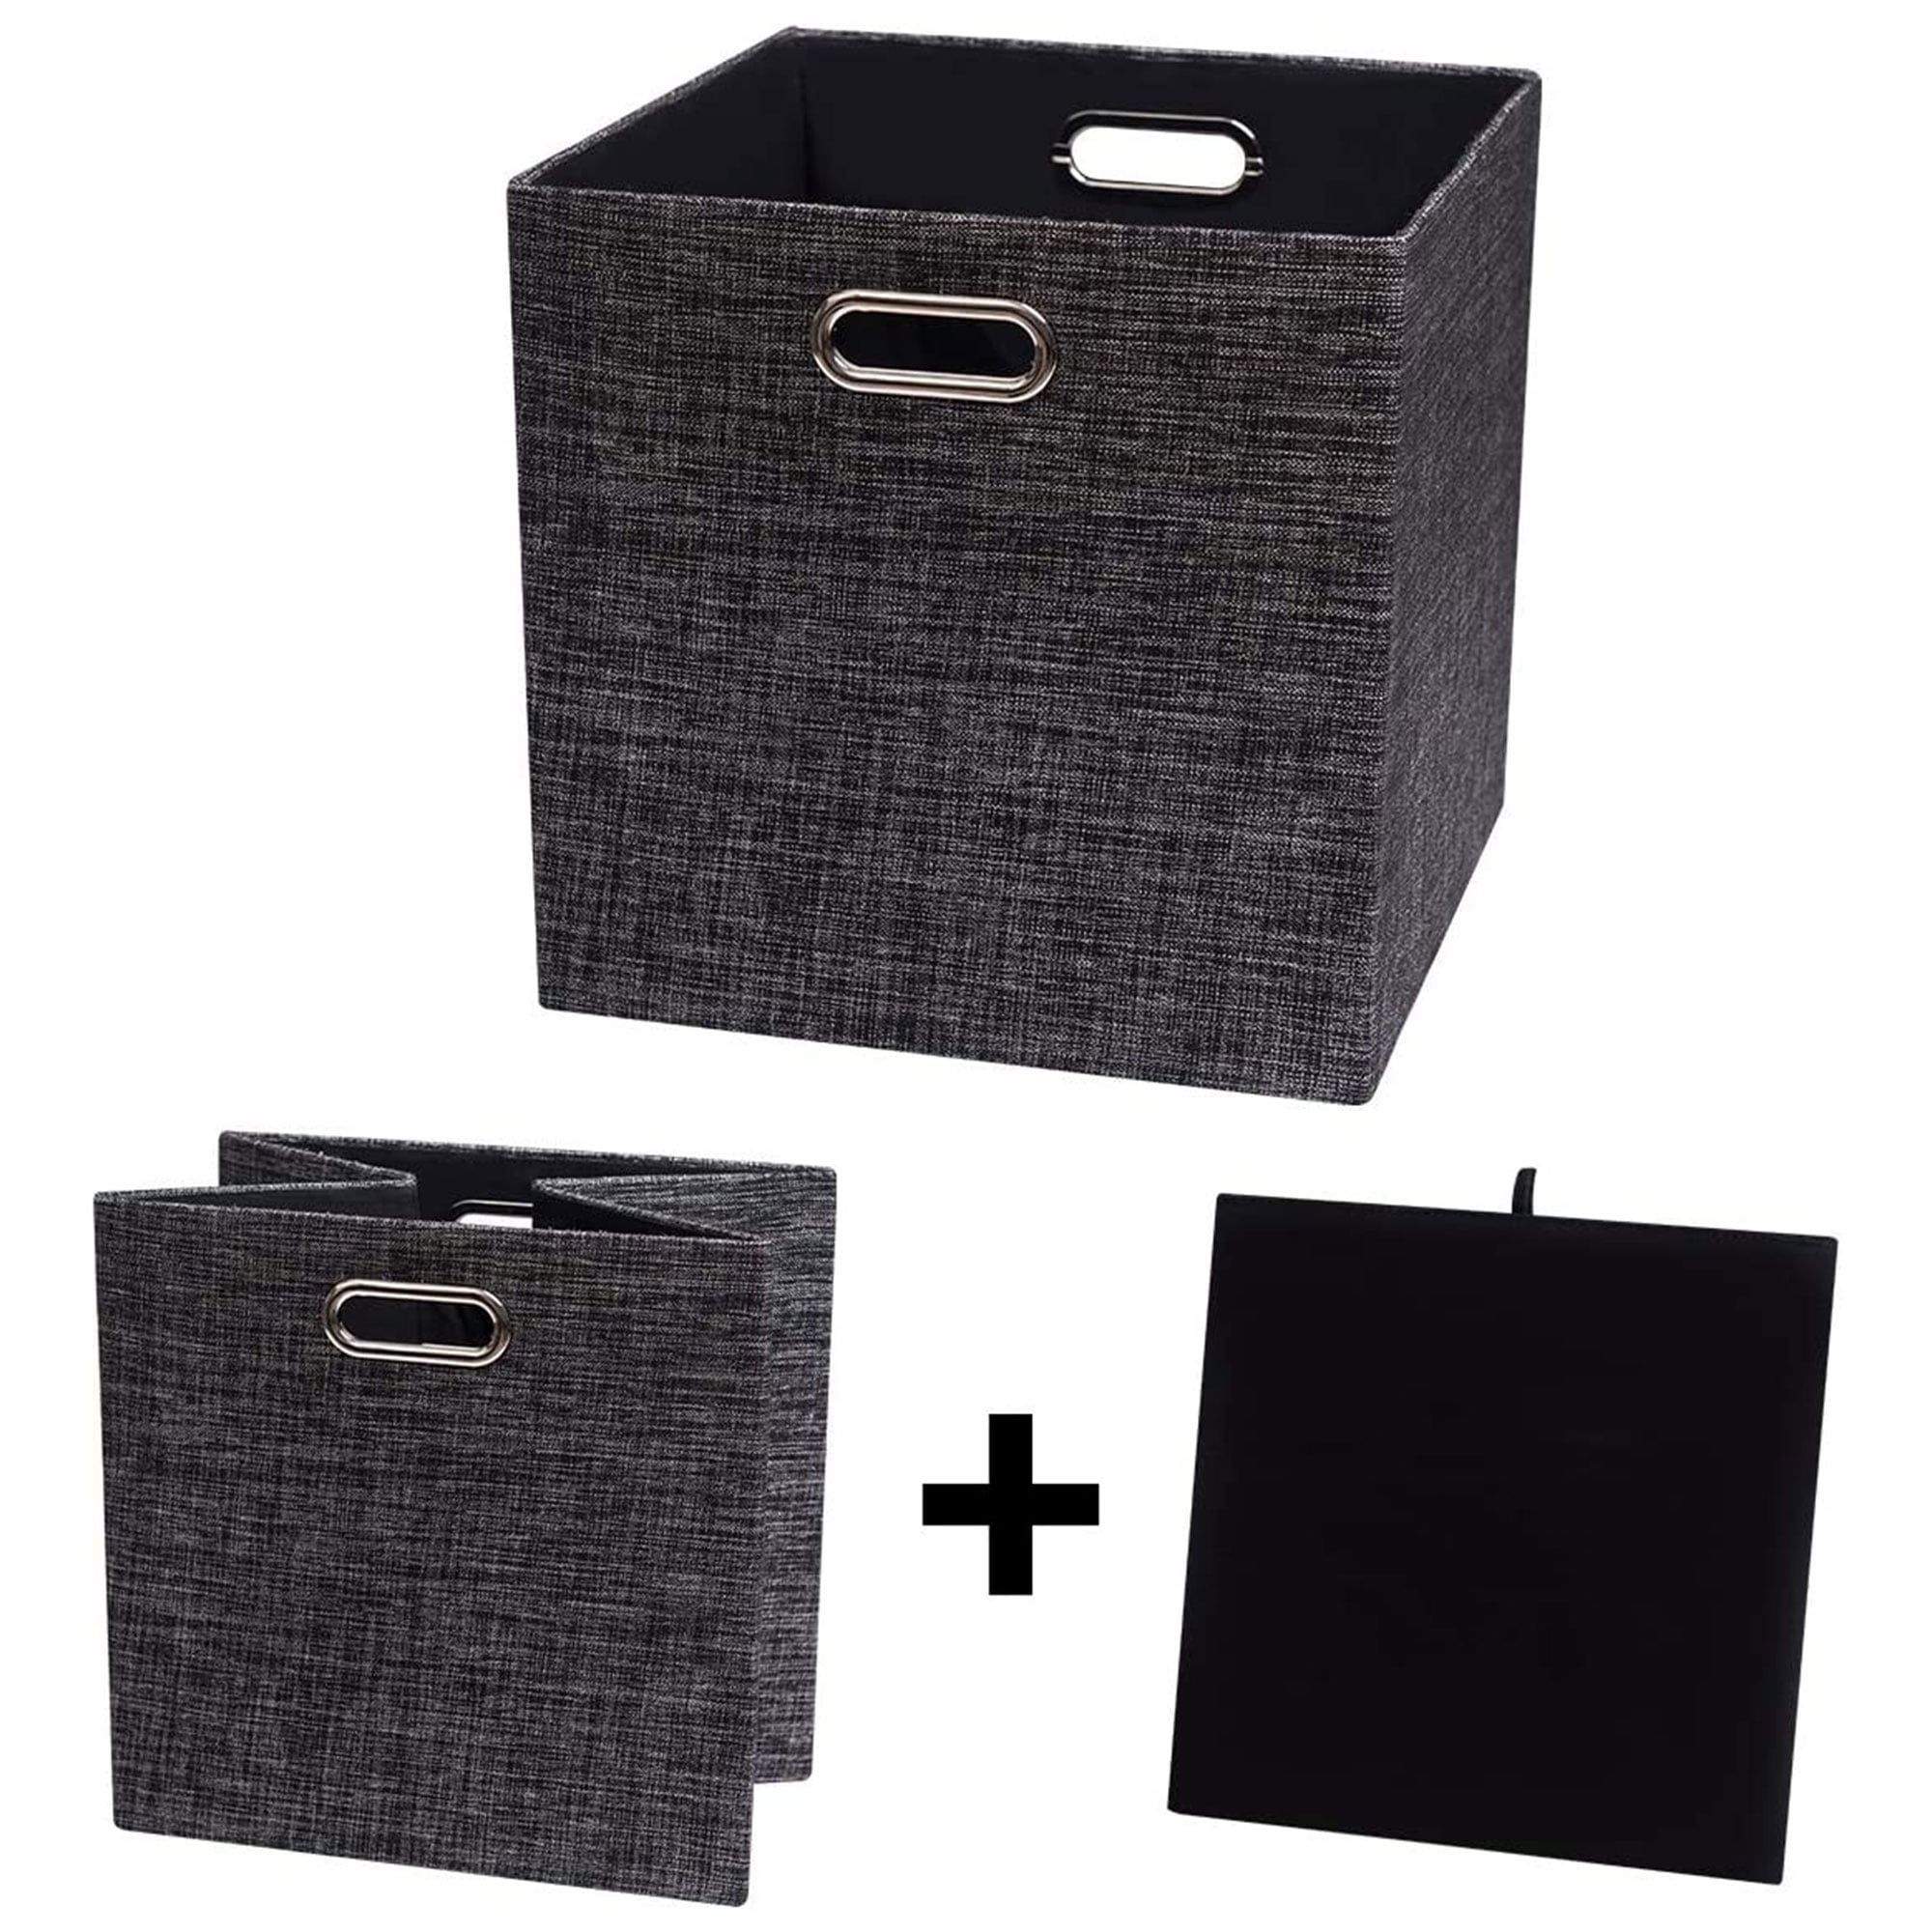  Posprica Storage Cubes, 12×12 Collapsible Storage